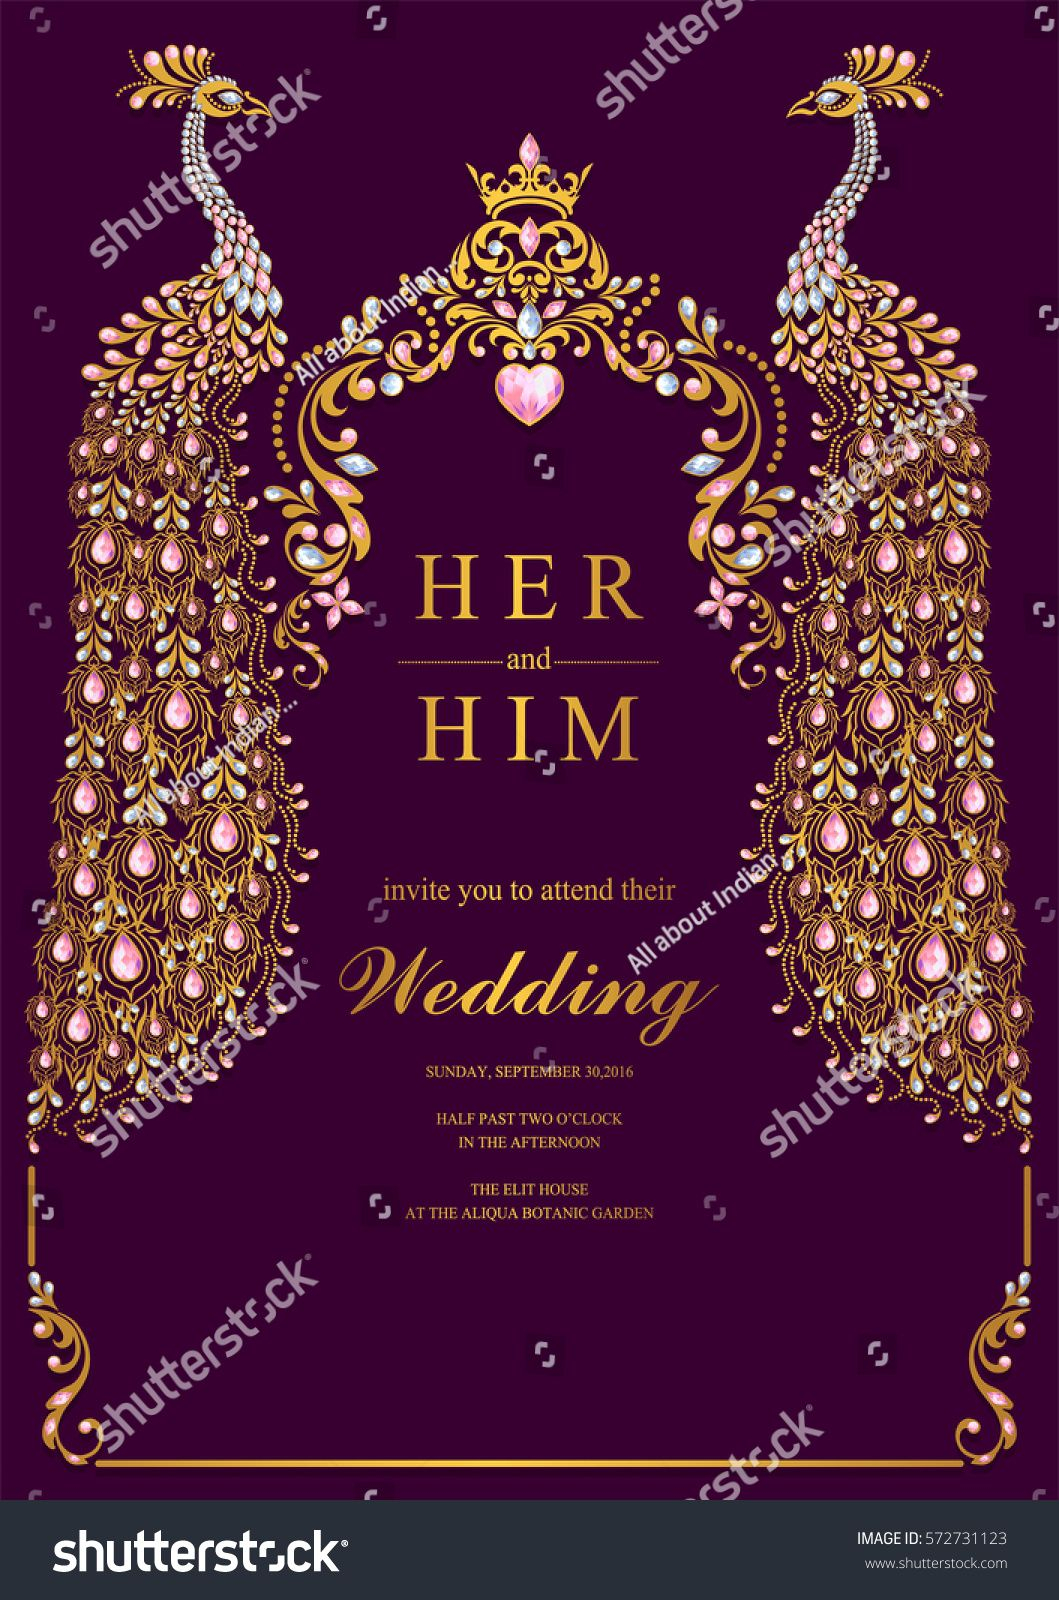 hindu wedding card invitation template free download